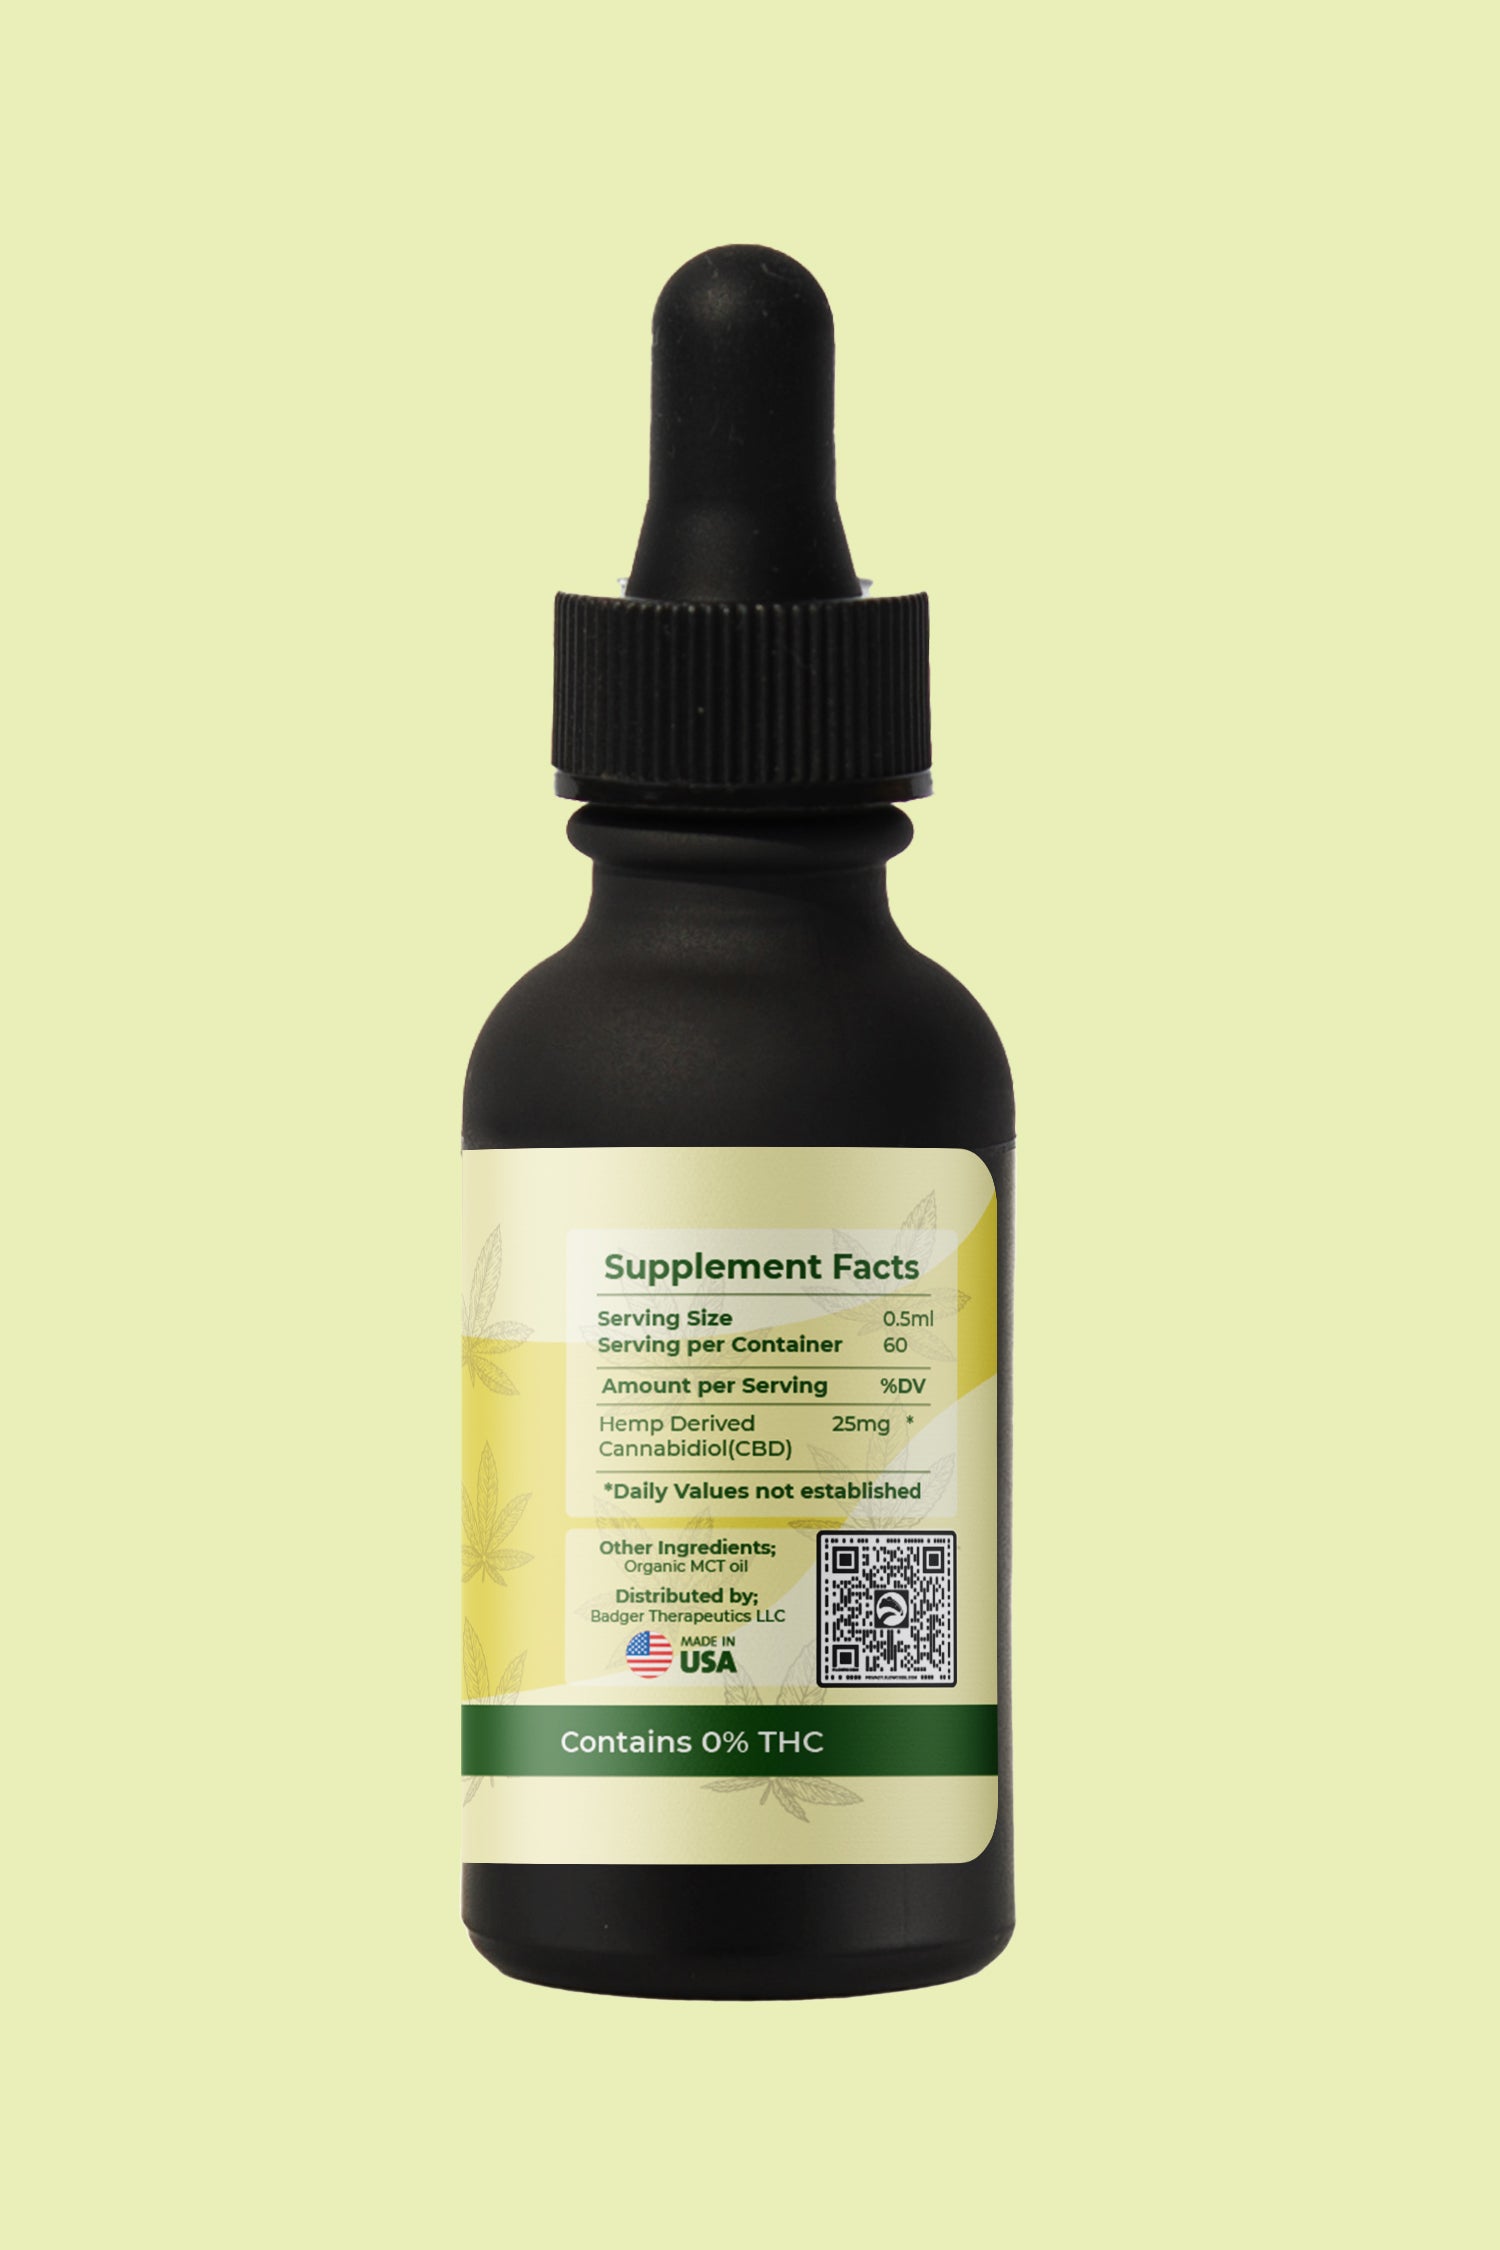 Badger Therapeutics Broad Spectrum CBD Oil with 1500 mg CBD